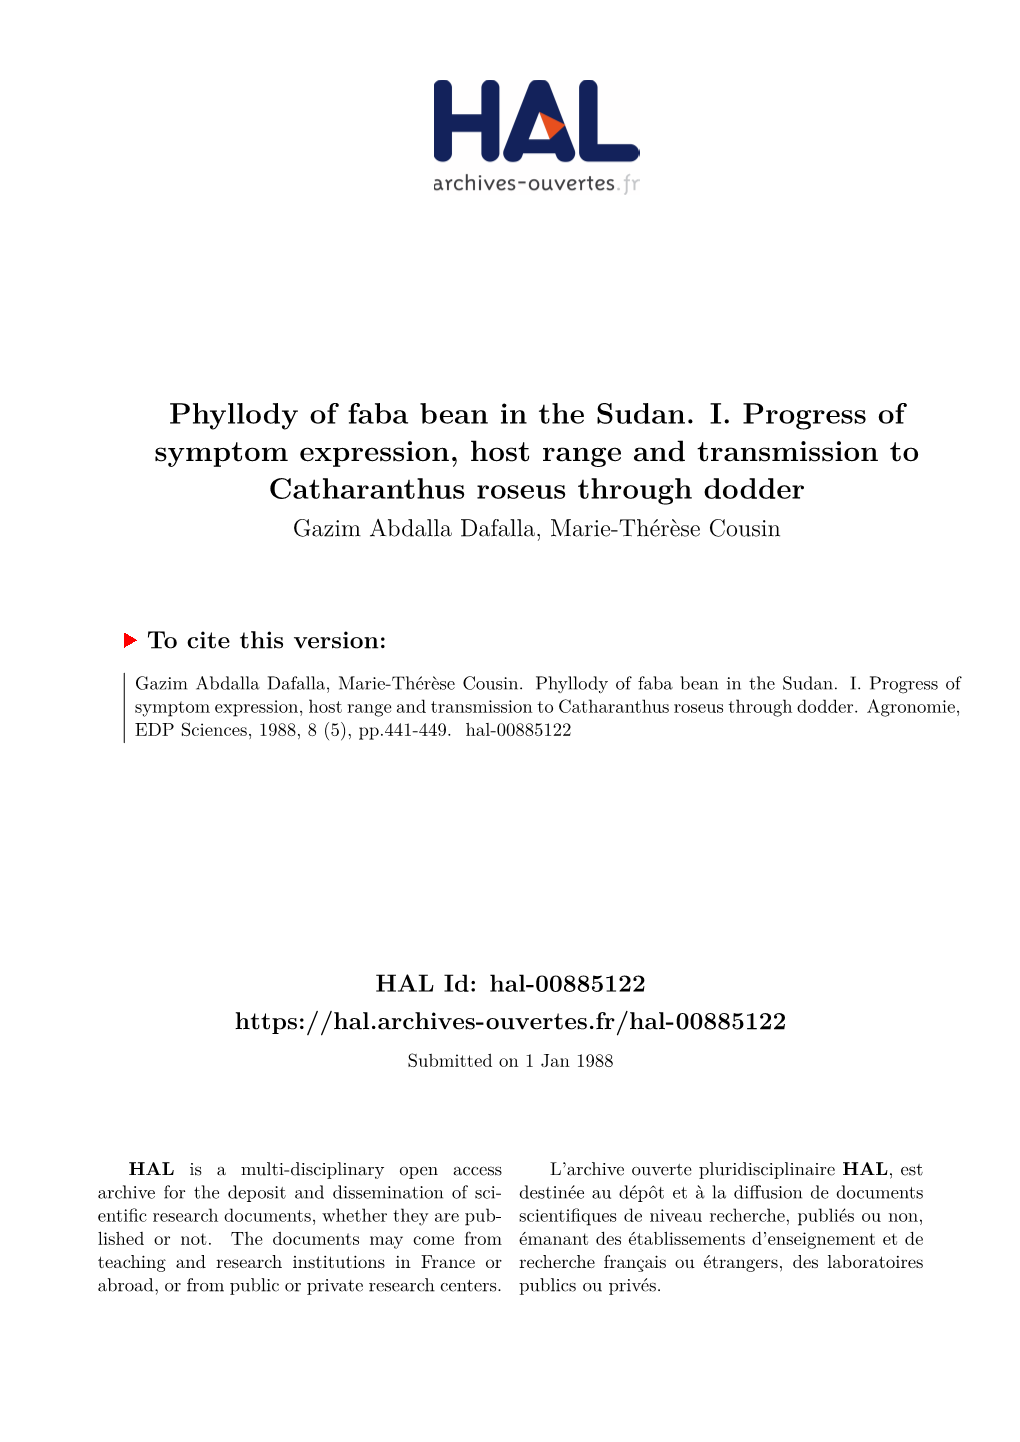 Phyllody of Faba Bean in the Sudan. I. Progress of Symptom Expression